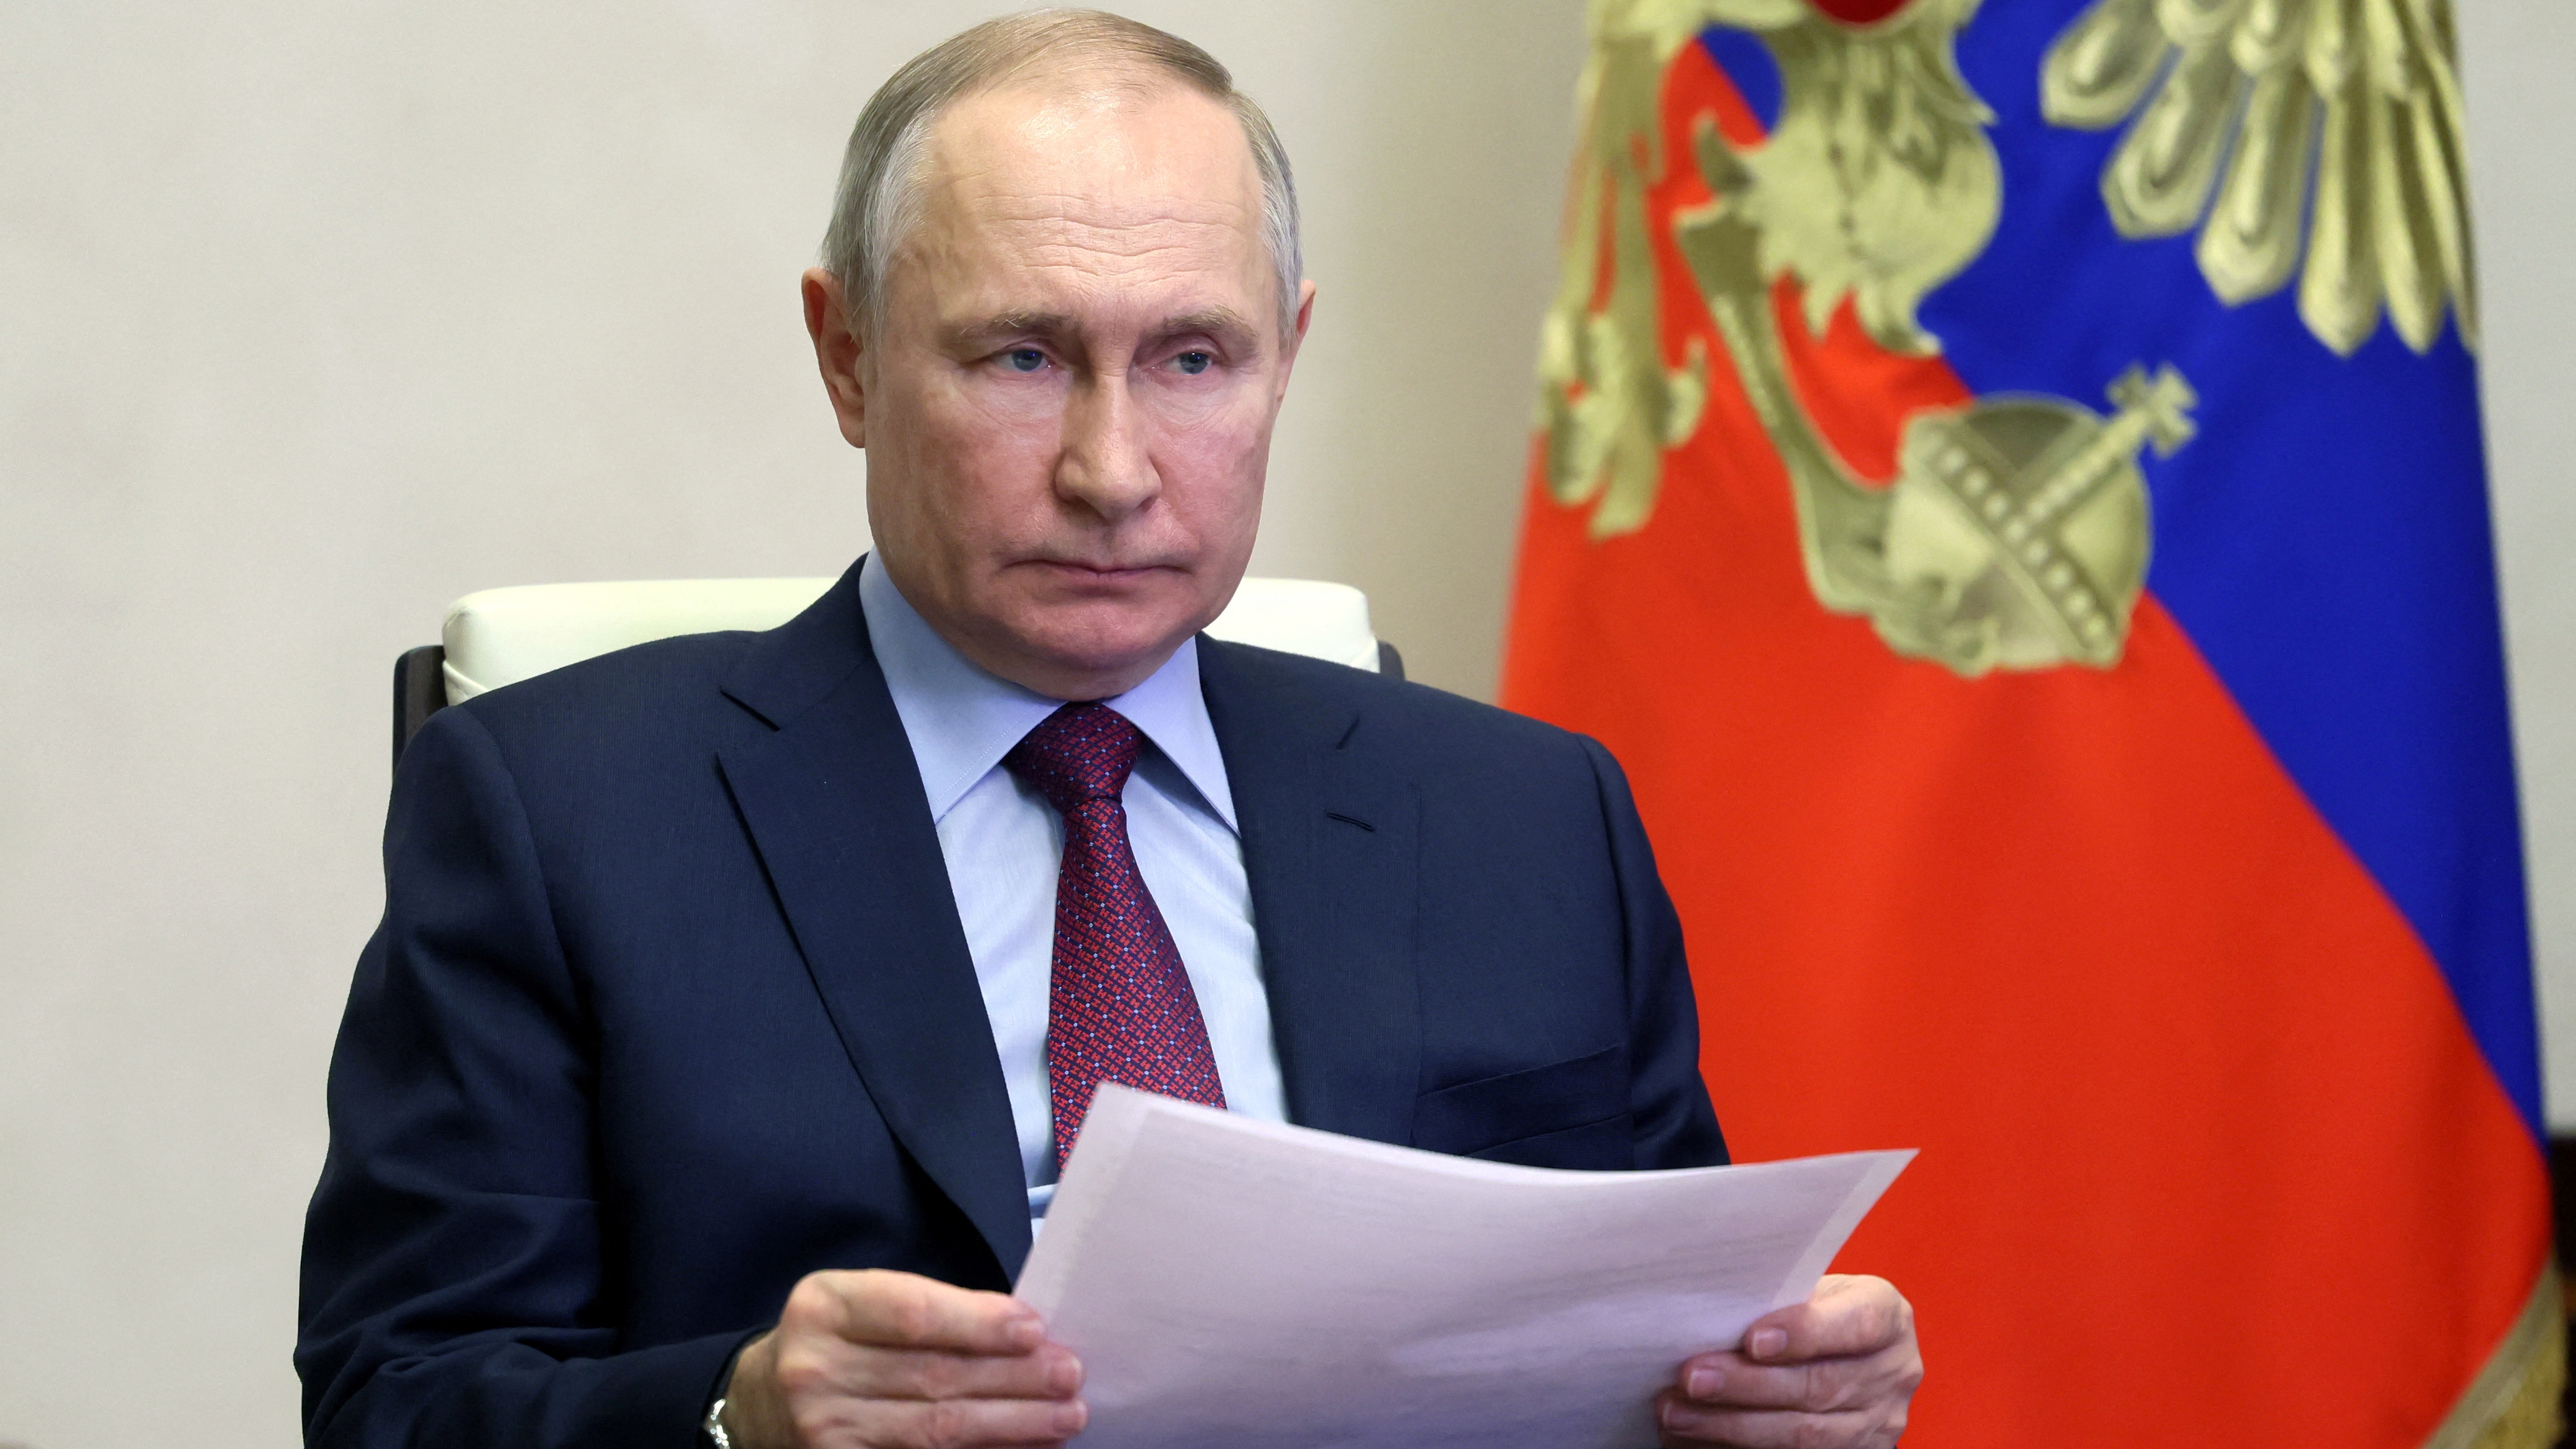 Vladimir Putin (Sputnik/Mikhail Metzel/Pool via REUTERS)